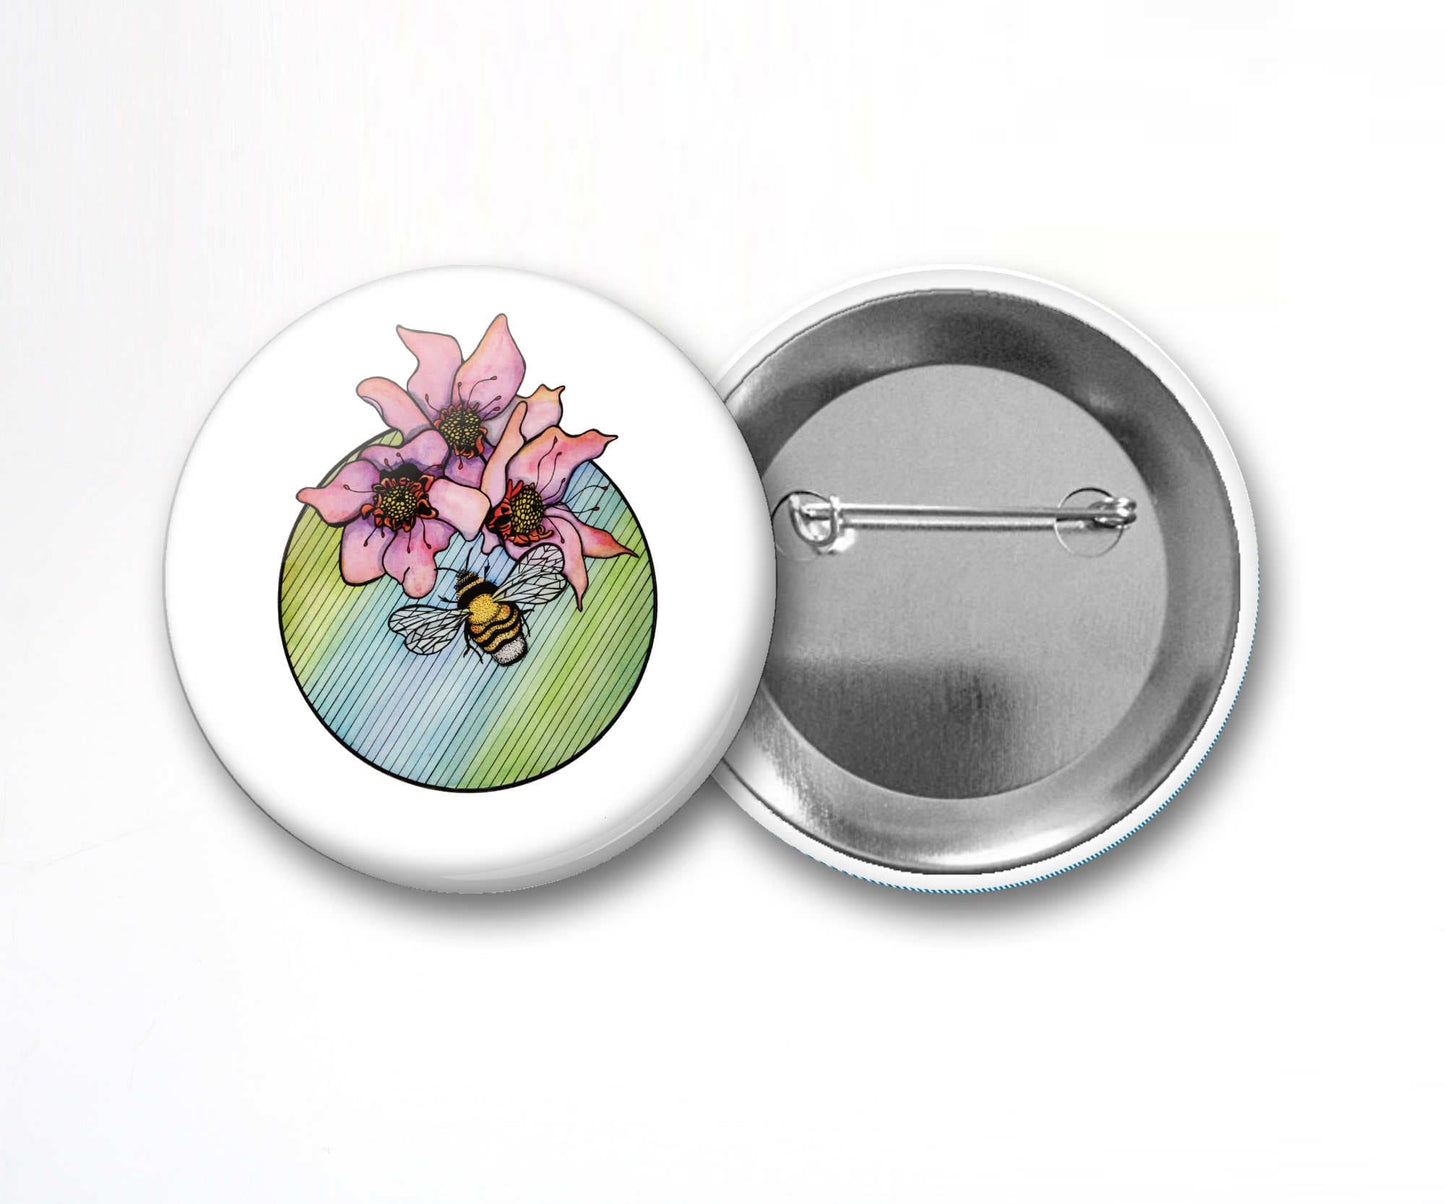 PinkPolish Design Buttons "Bumble" Pin Back Art Button, 2.25"